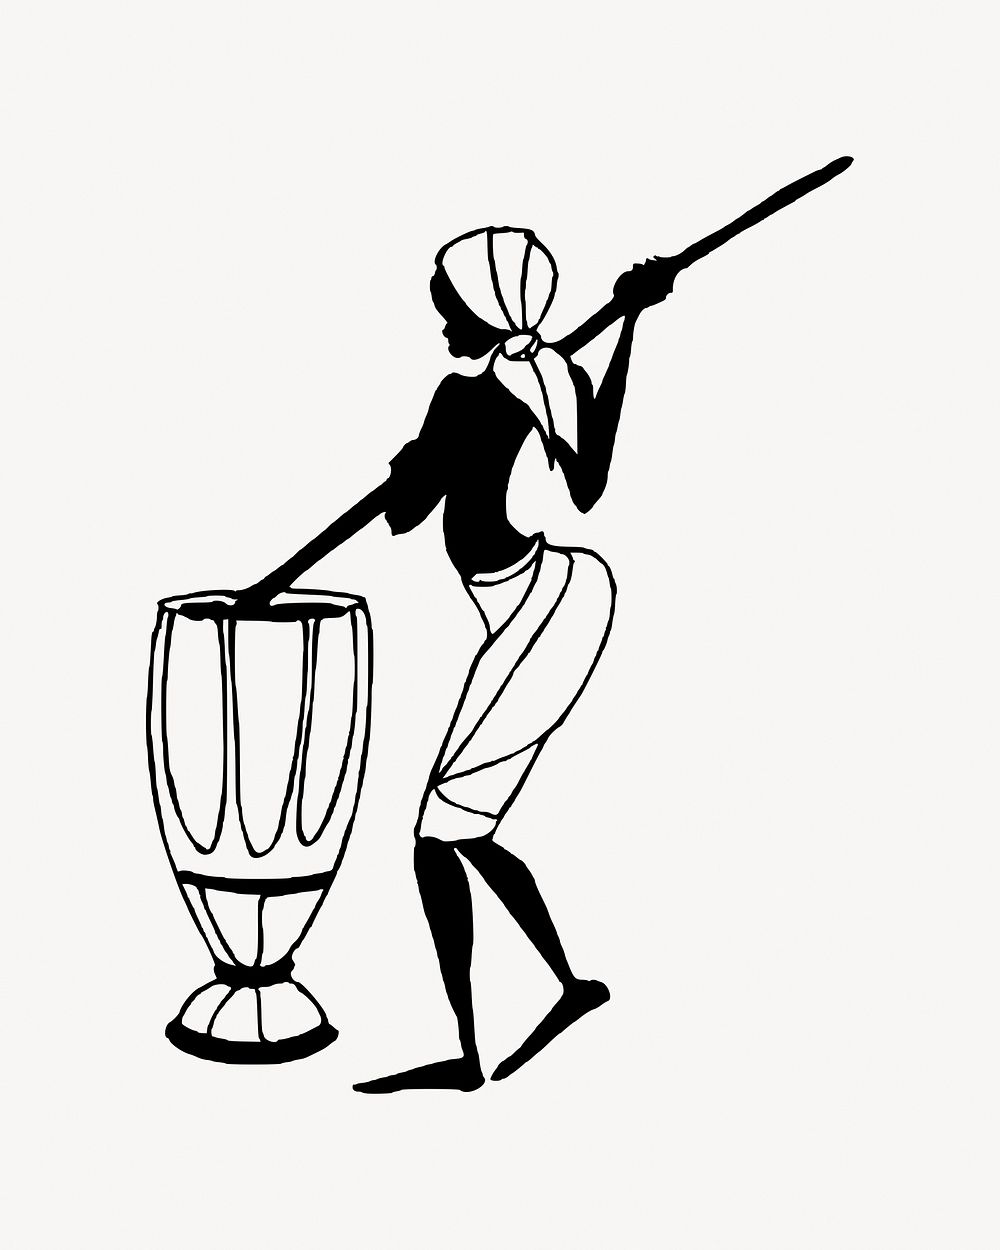 Silhouette man clipart illustration vector. Free public domain CC0 image.